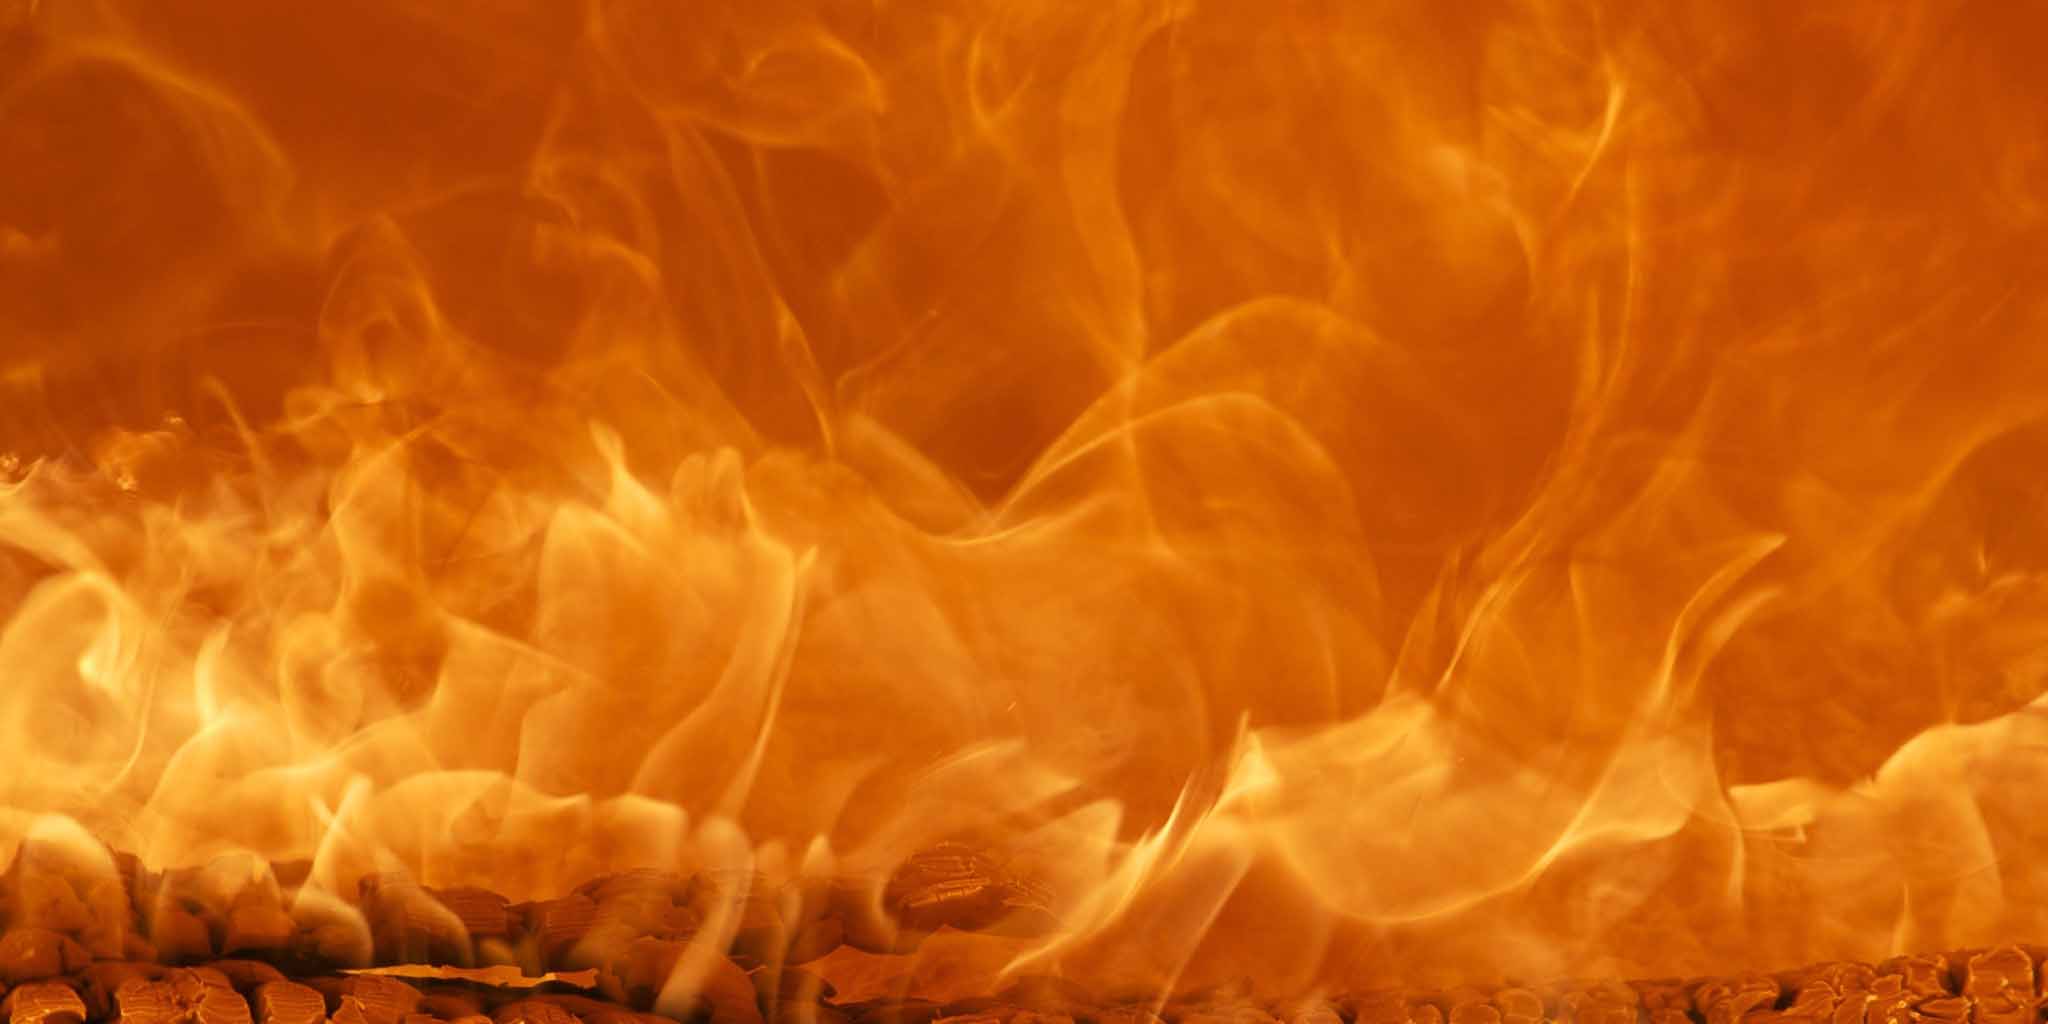 Closeup of a blazing hot orange fire